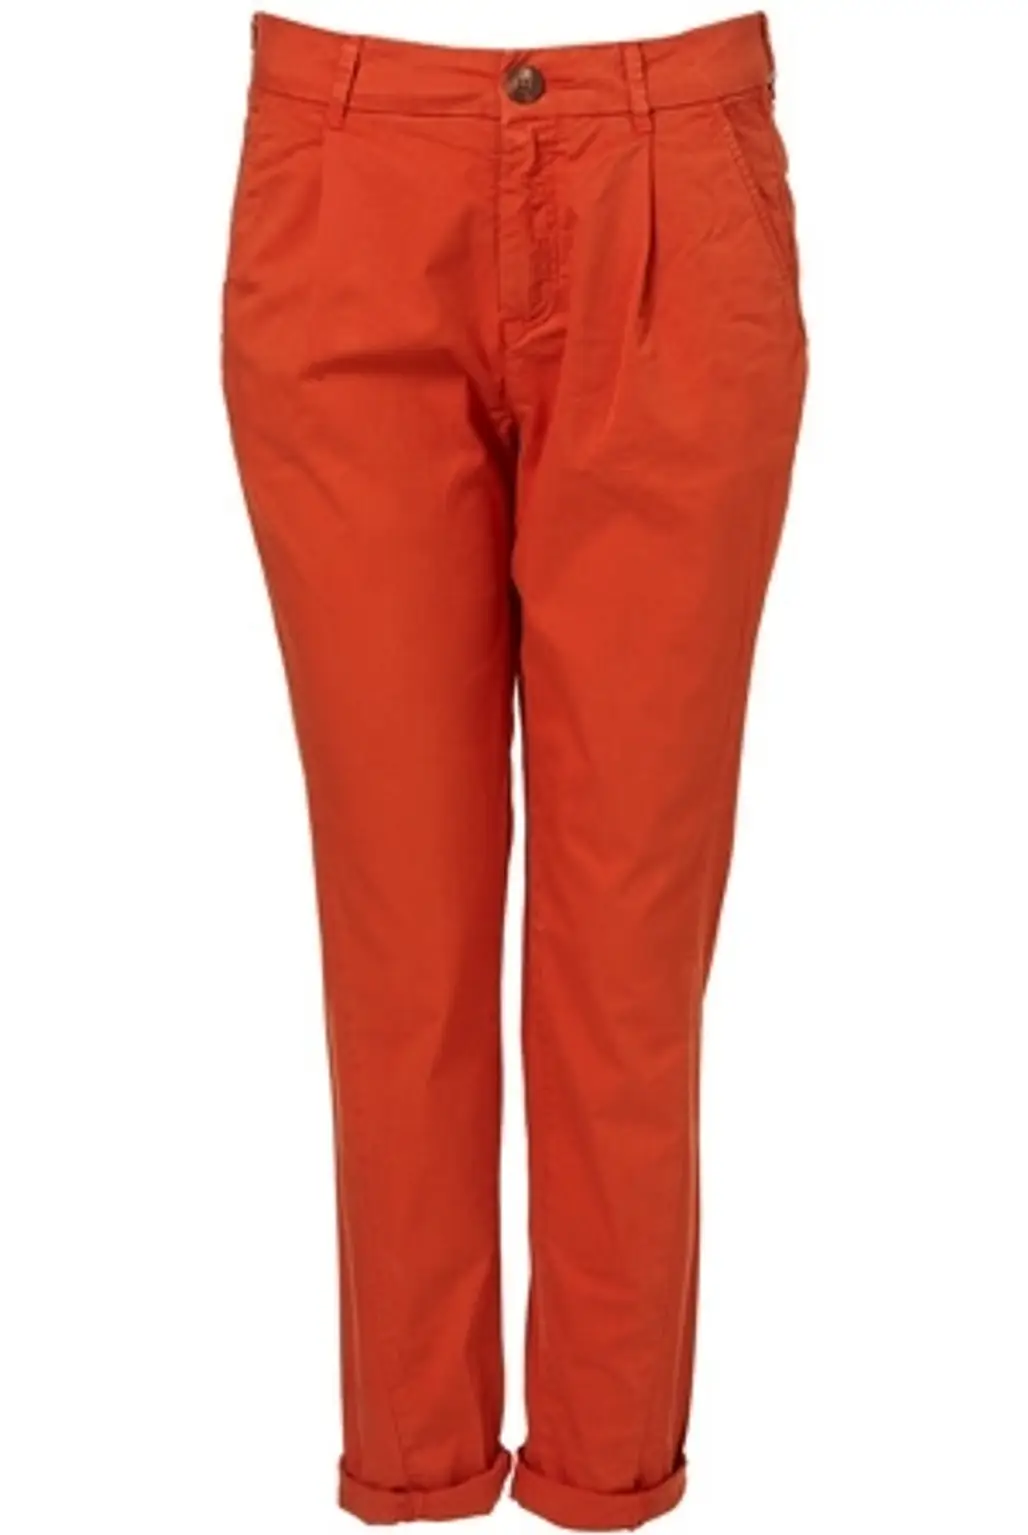 Topshop Orange Chino Trousers